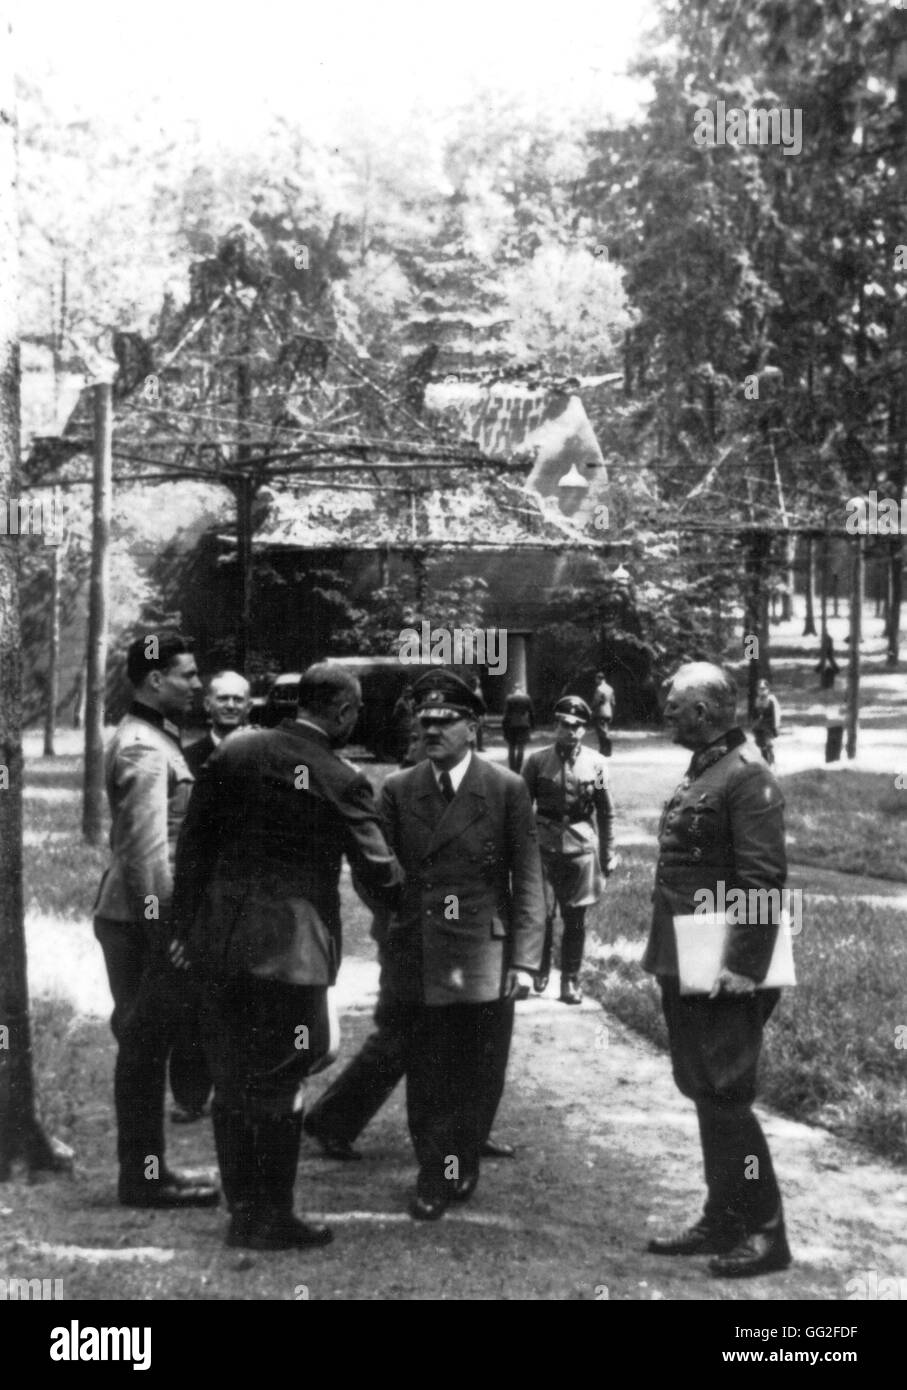 Ante el intento de asesinato contra Hitler. Stauffenberg, Puttkamer, Bodenschatz, Hitler, Keitel en frente del edificio donde la bomba explotará. 20 de julio de 1944 Alemania - Segunda Guerra Mundial Foto de stock